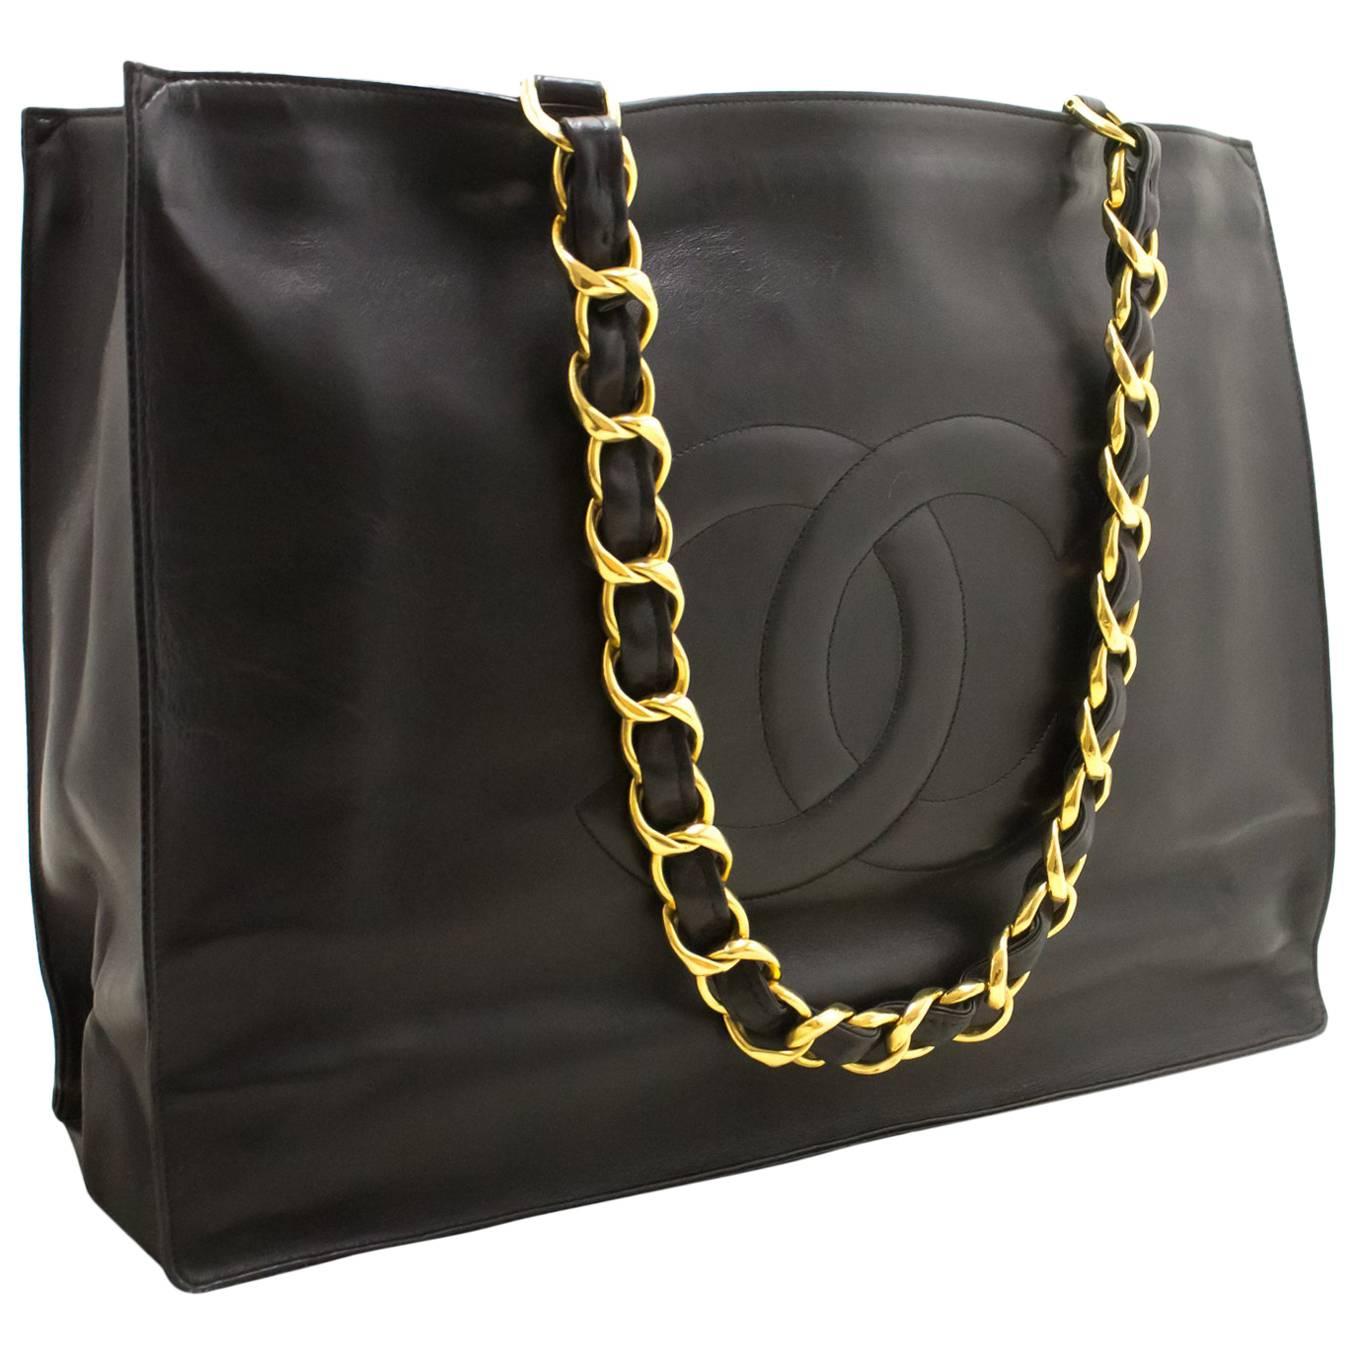 CHANEL Jumbo Large Chain Shoulder Bag Black Lambskin Leather Big